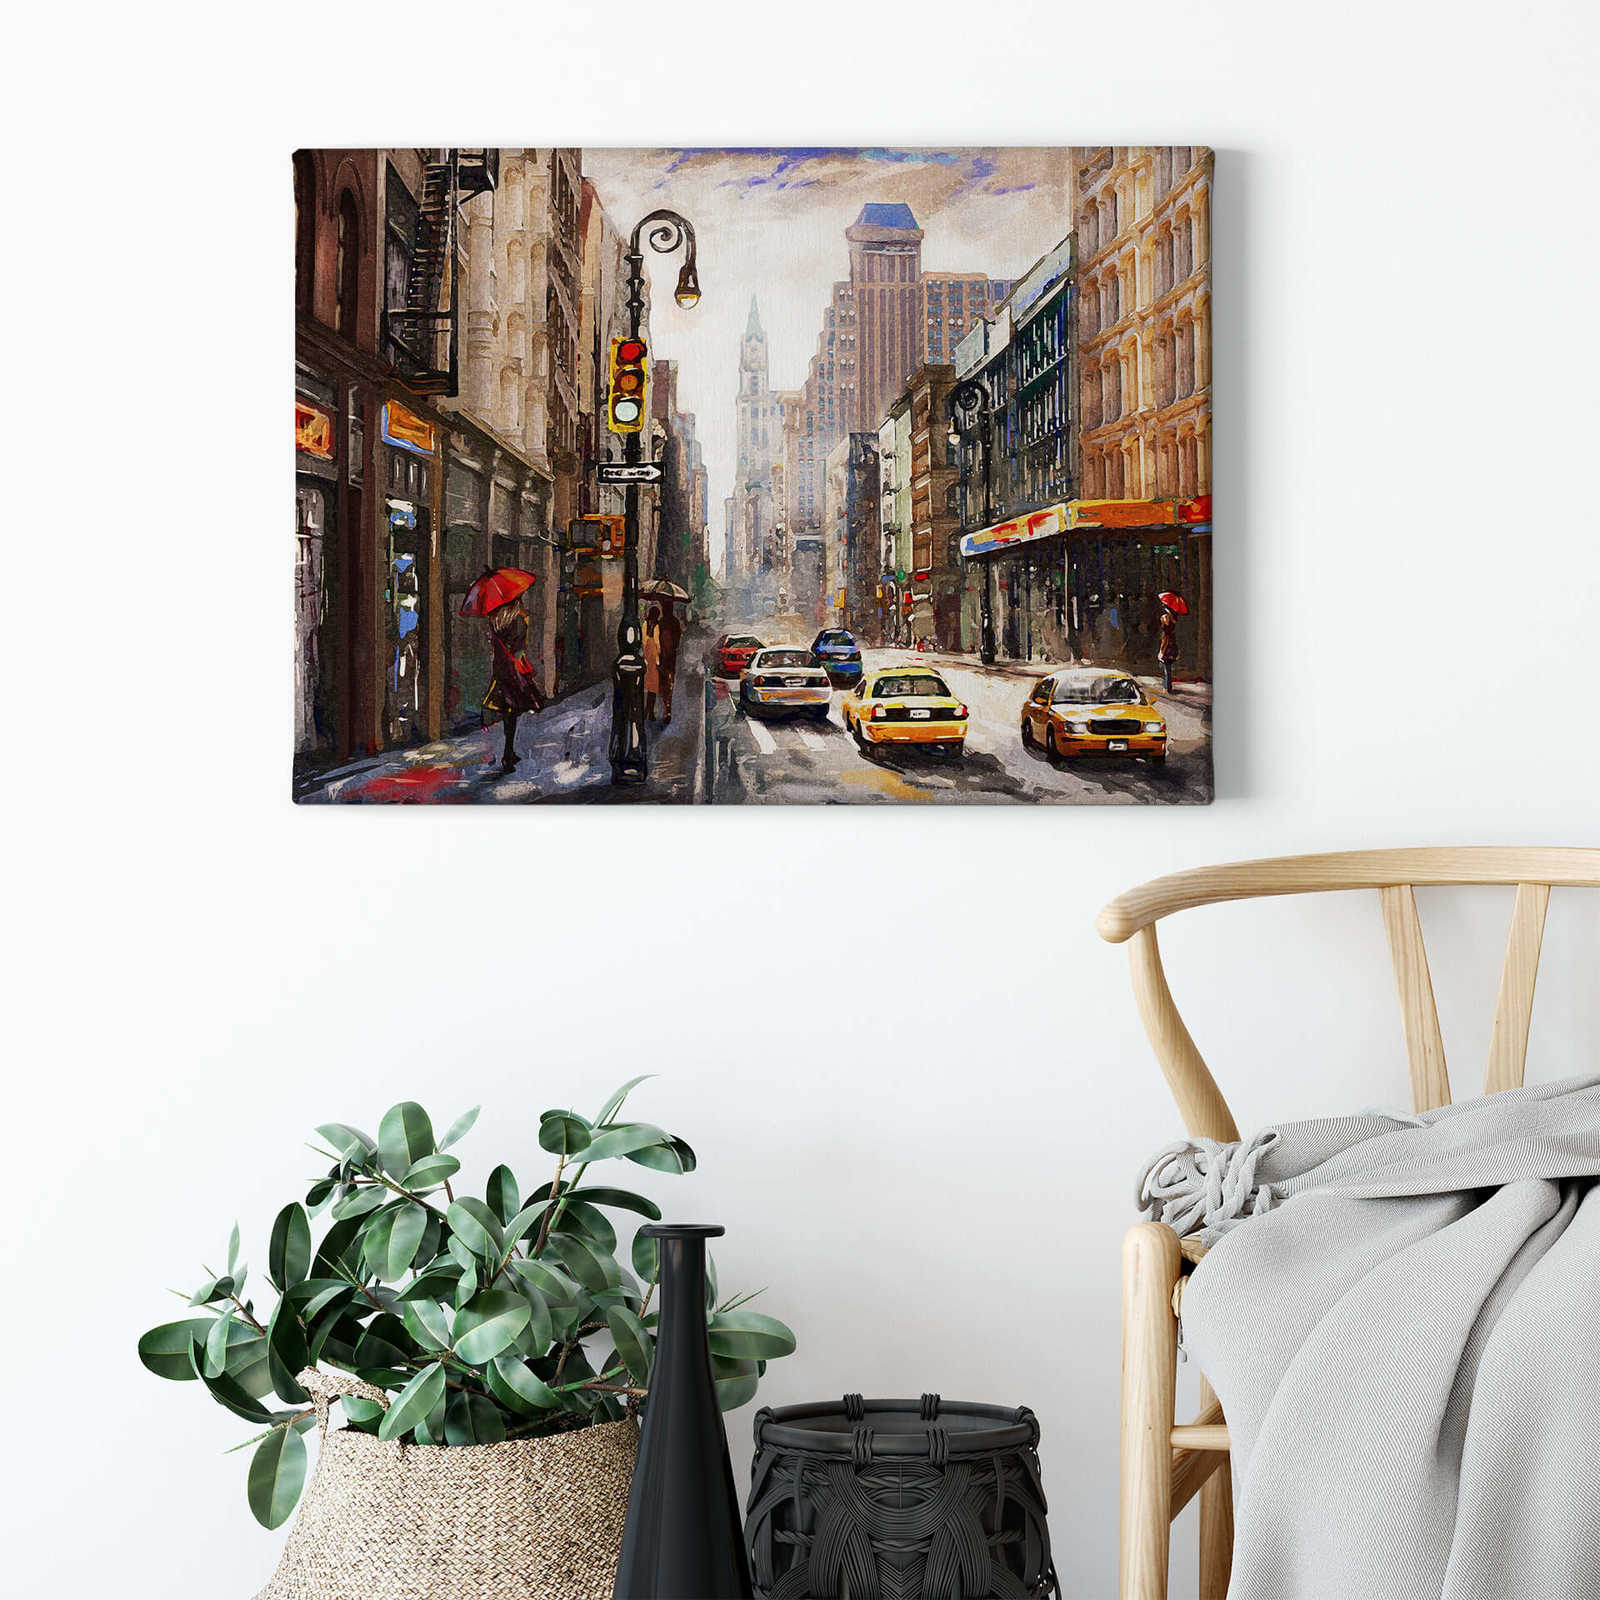             Leinwandbild Gemälde New York City – 0,70 m x 0,50 m
        